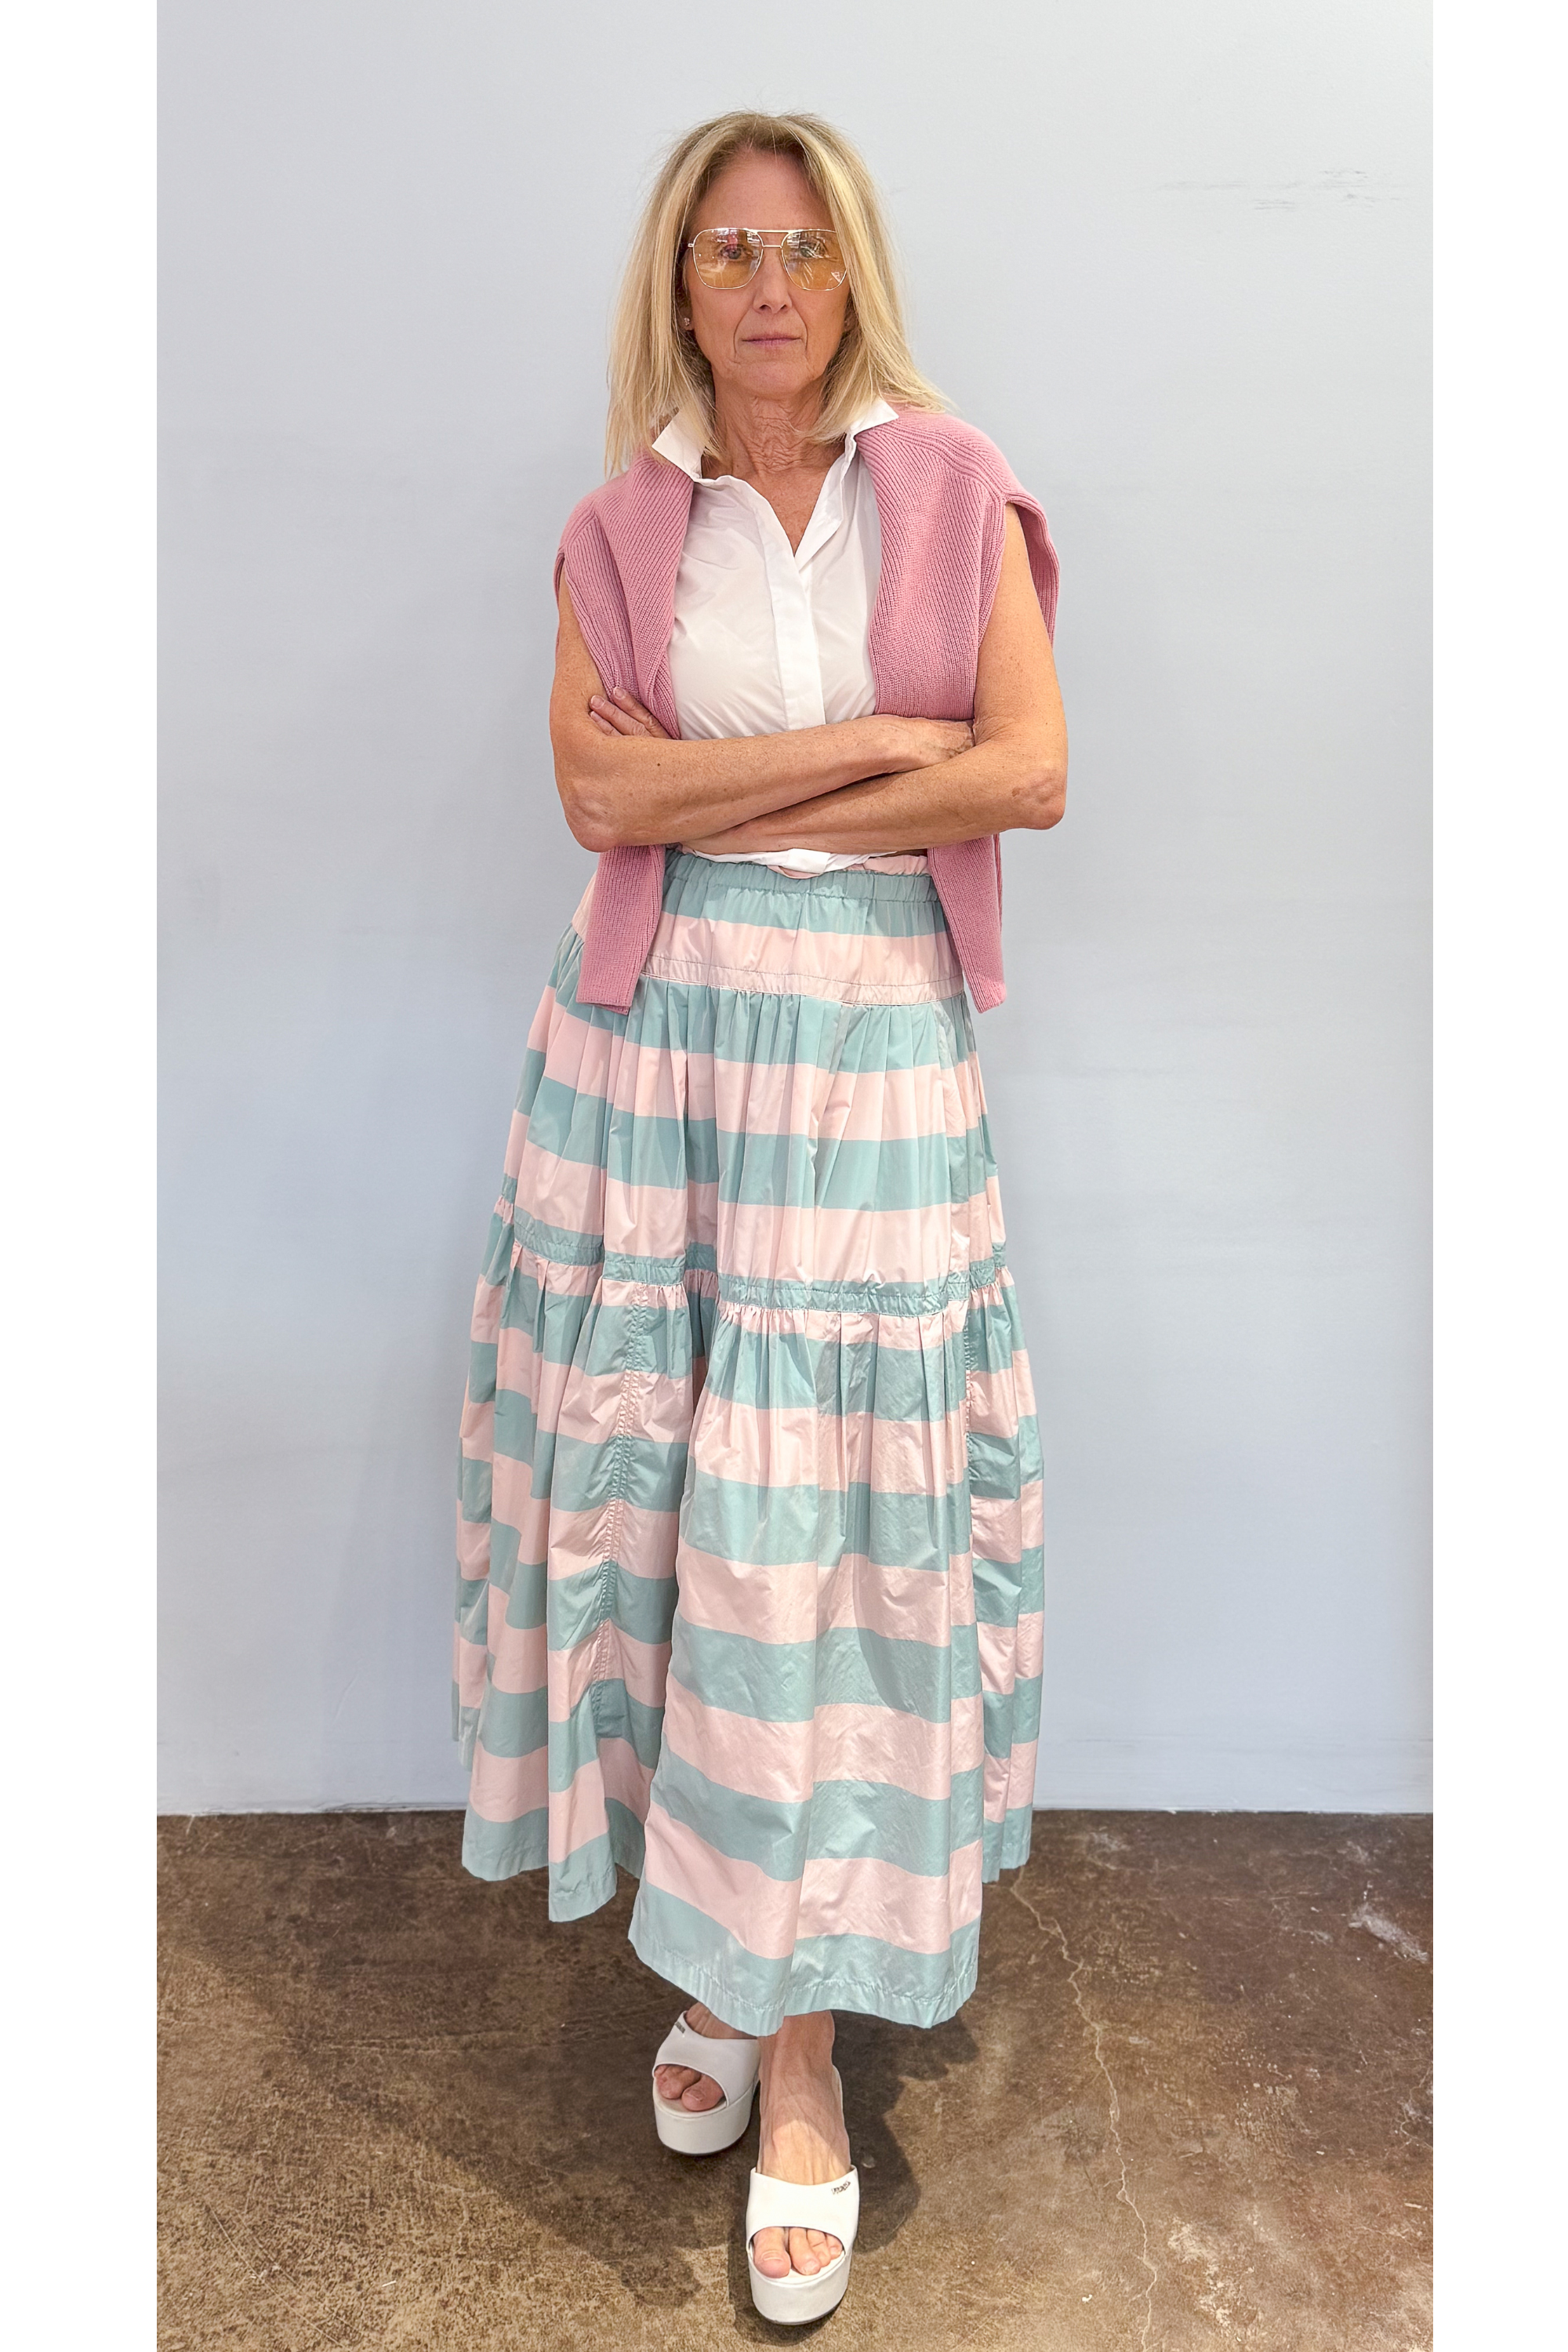 White Top & Taffetta Skirt Featured Look